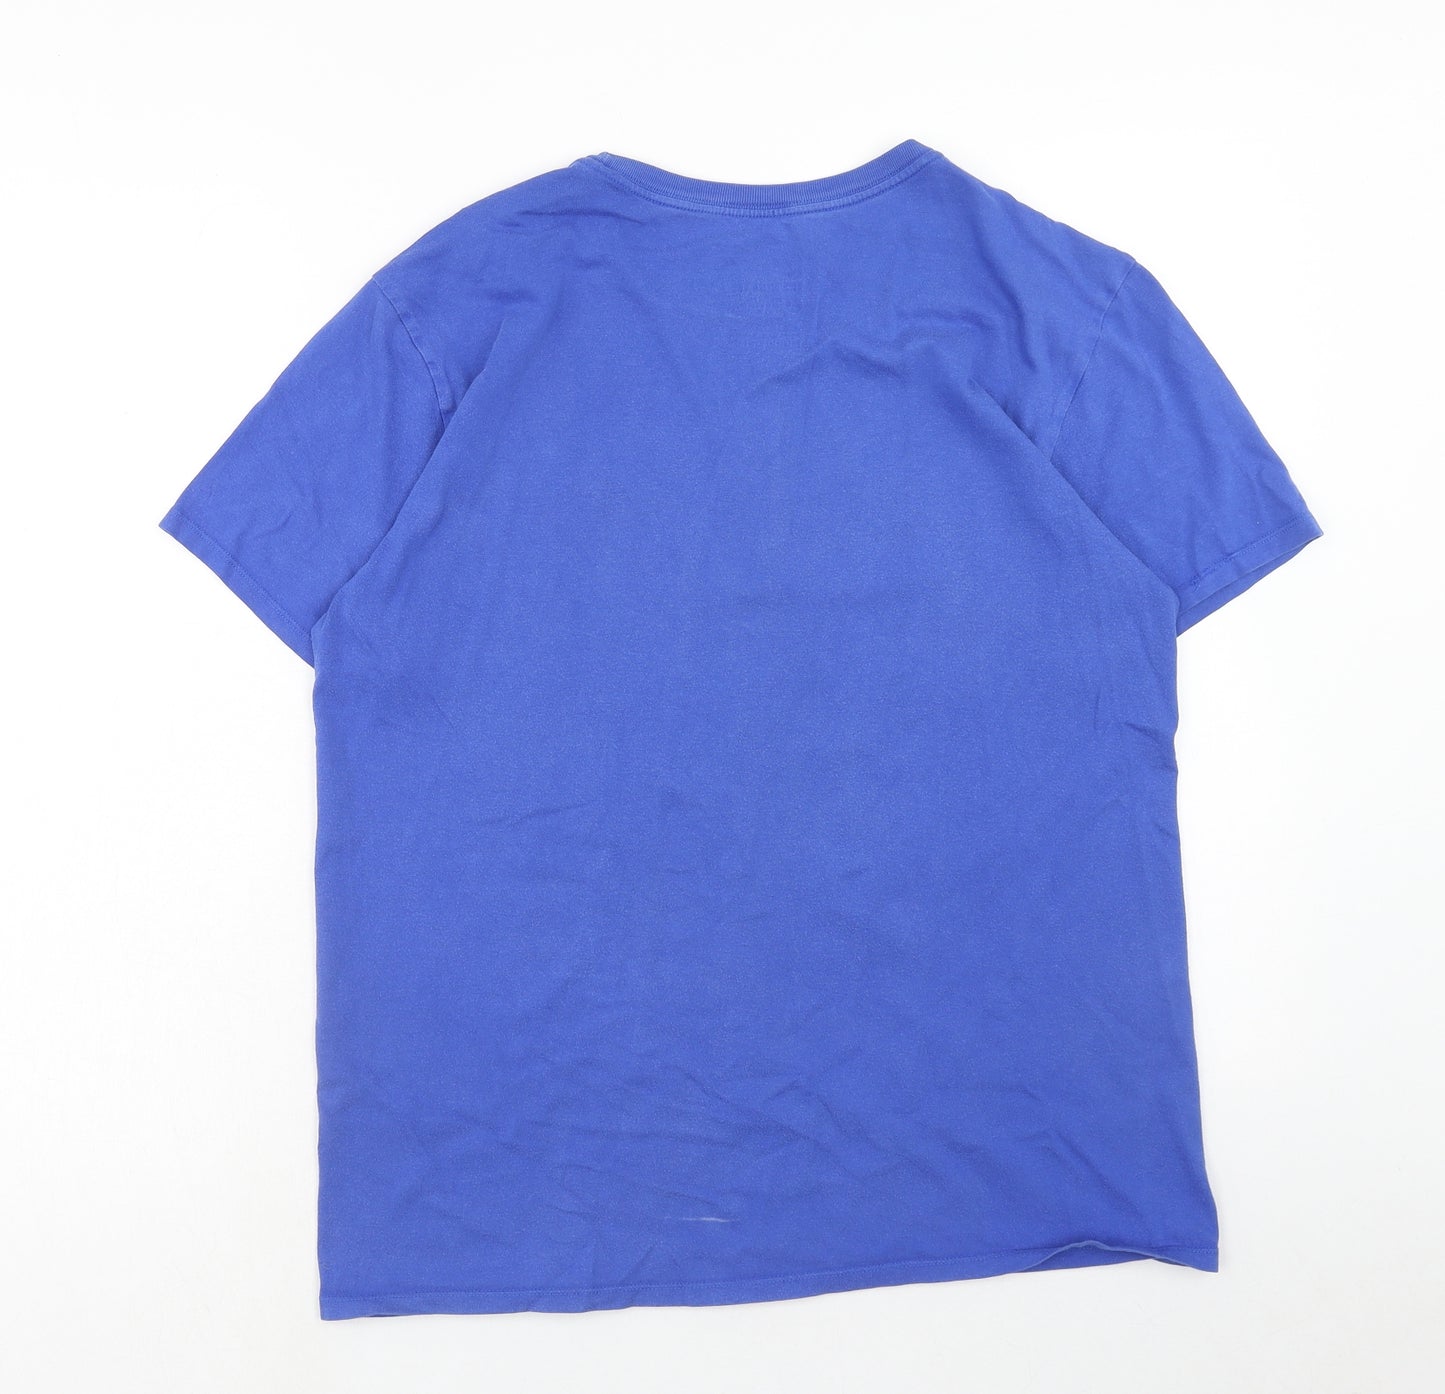 Nike Mens Blue Cotton T-Shirt Size M Round Neck - Just Do It